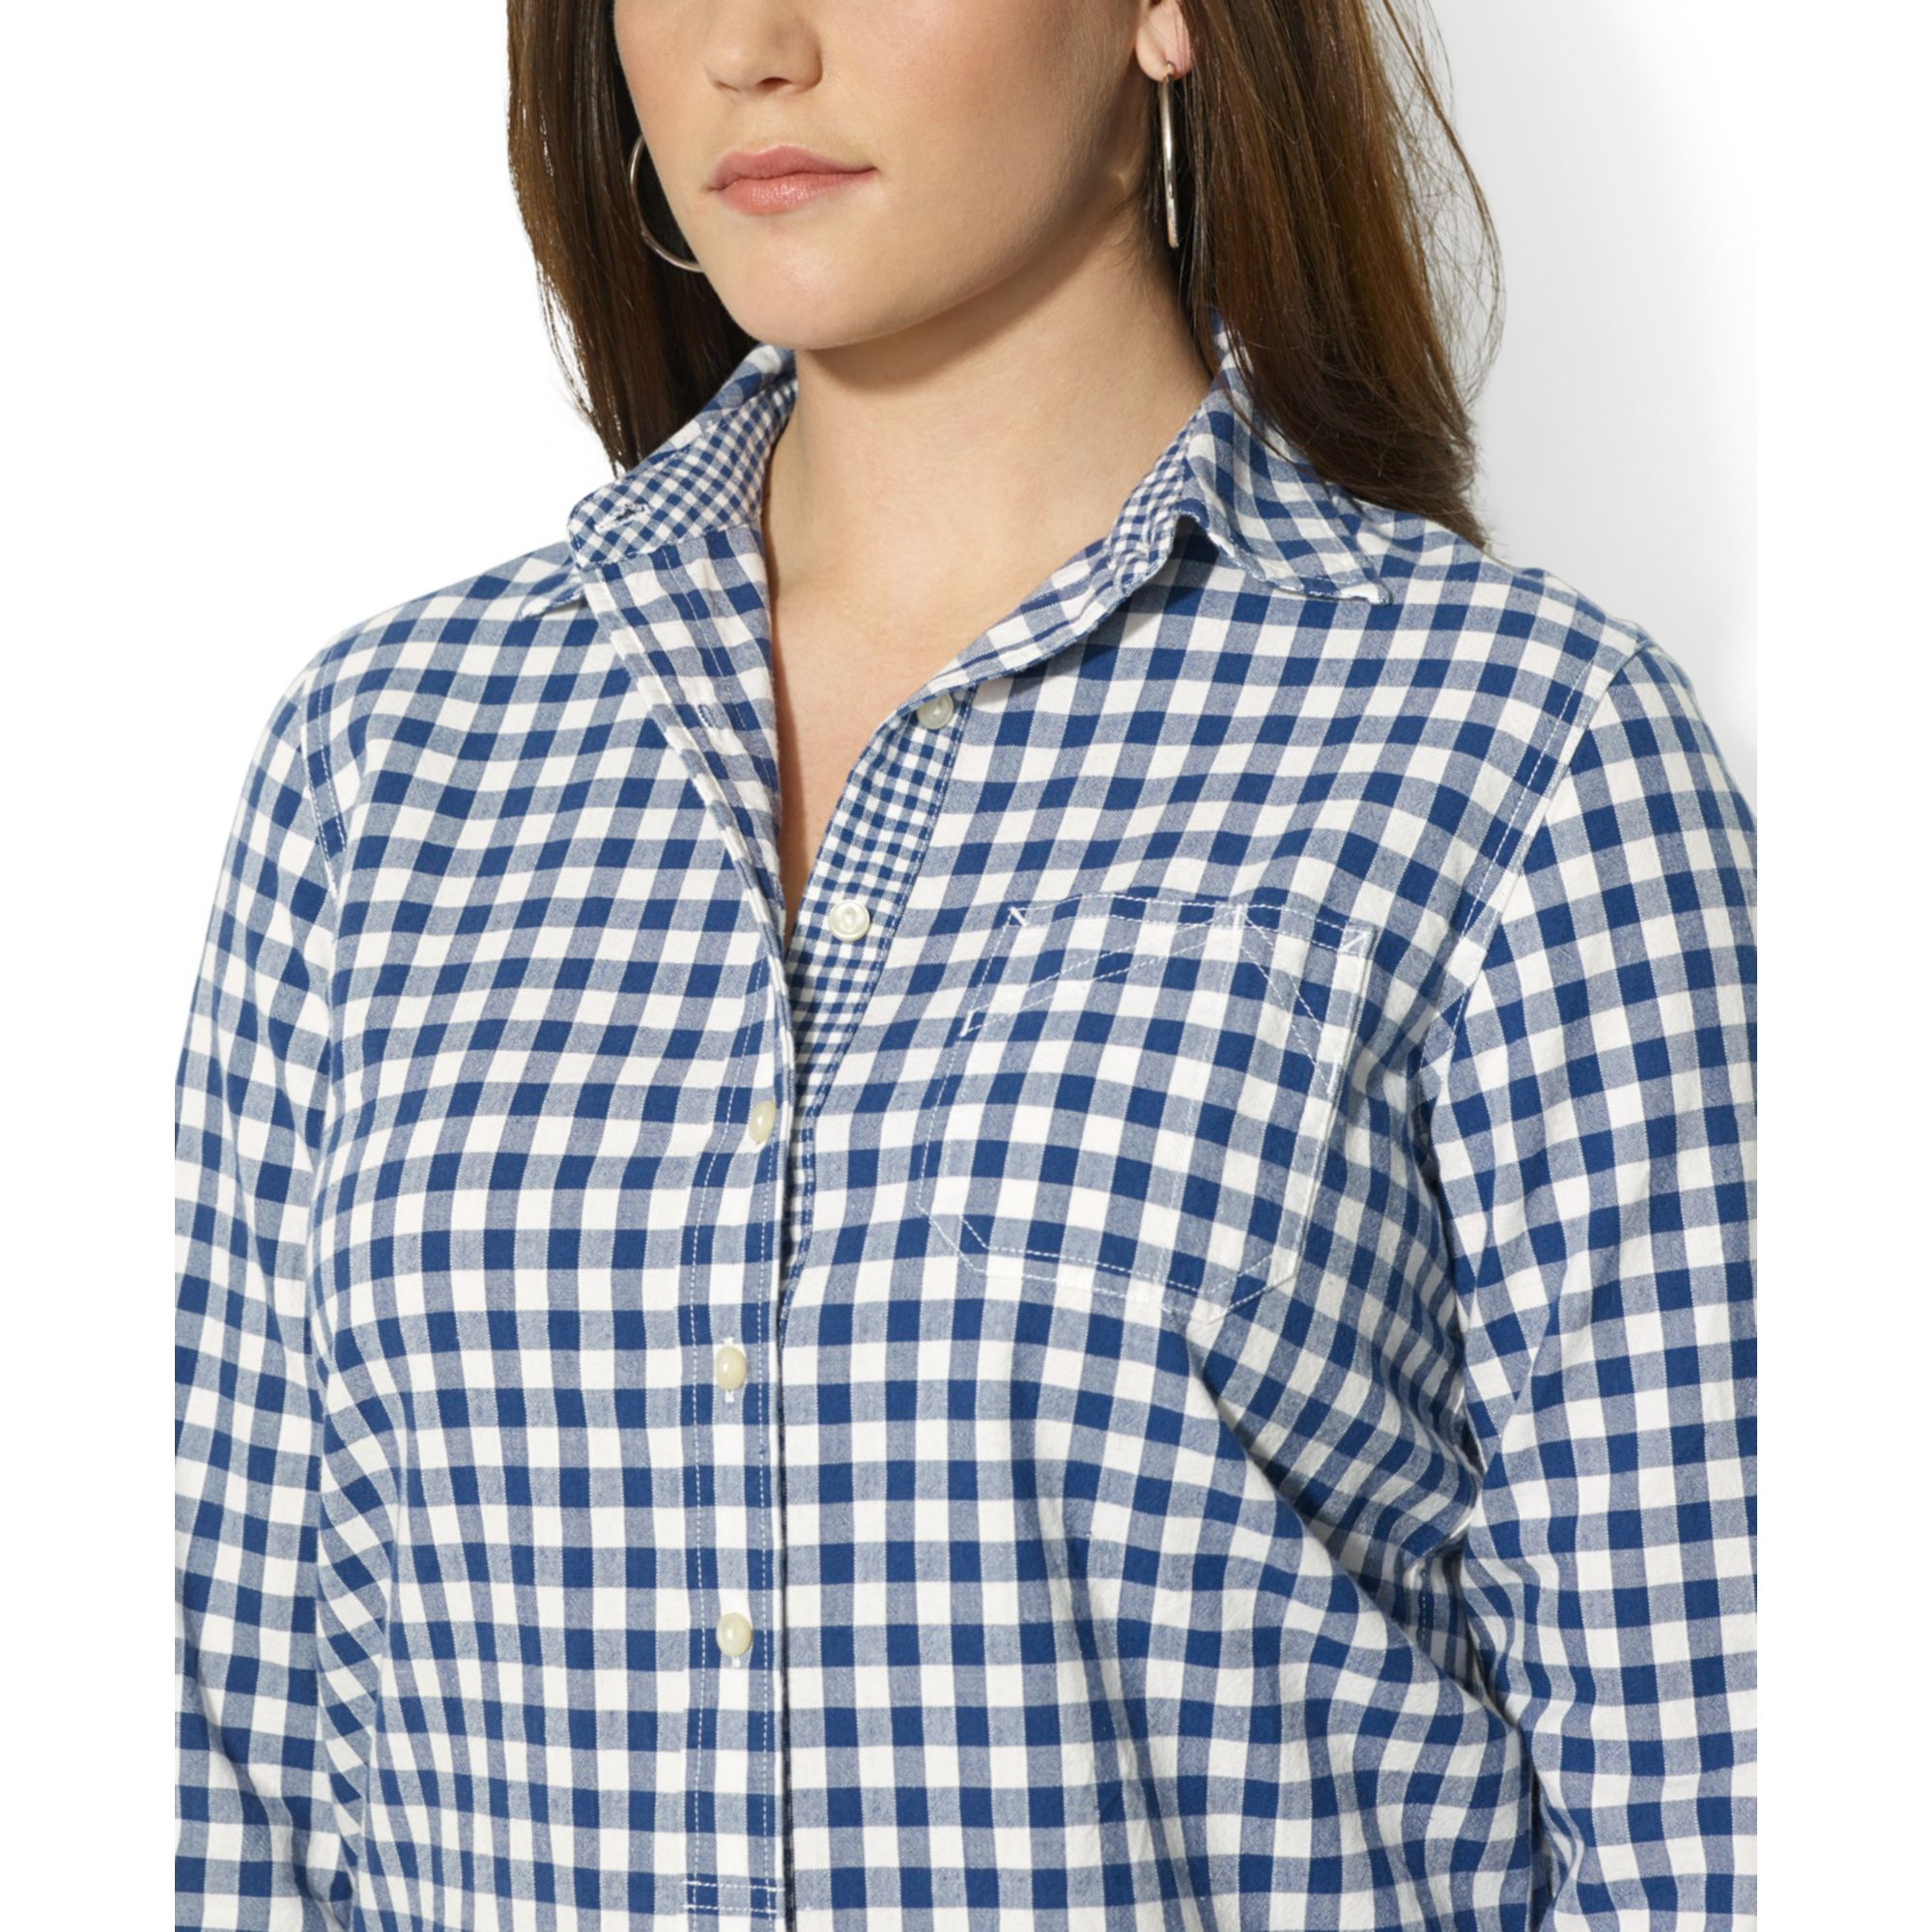 Lyst - Lauren by Ralph Lauren Plus Size Contrast Cuff Gingham Shirt in Blue